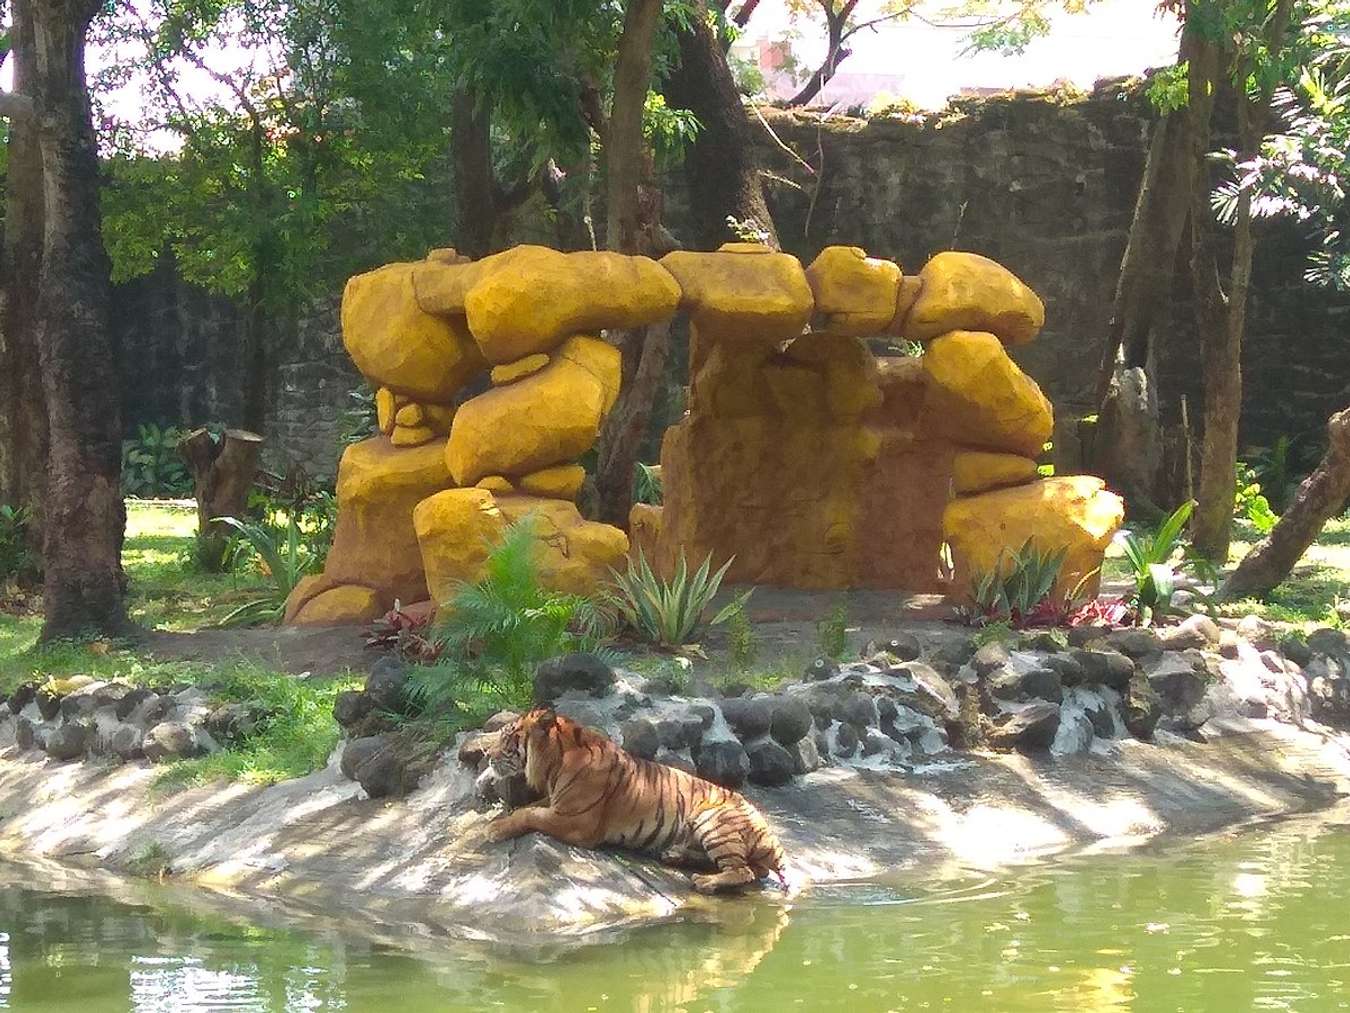 Kebun Binatang Surabaya - Wisata Anak di Surabaya